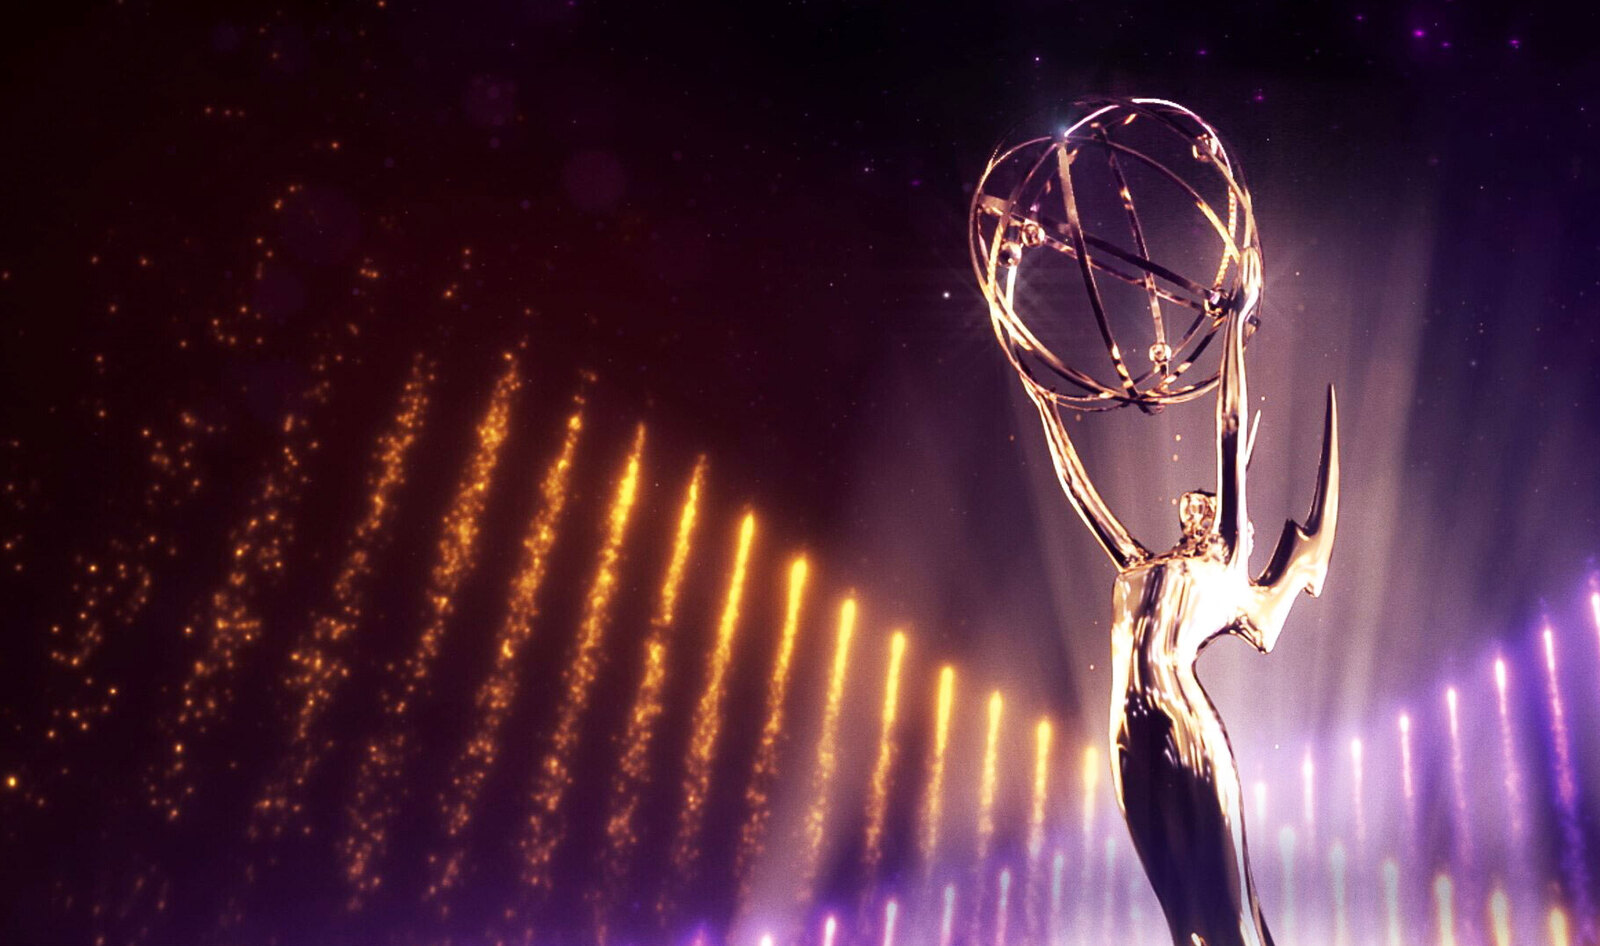 Emmy Awards to Serve Vegan Beyond Sliders to Celebrities